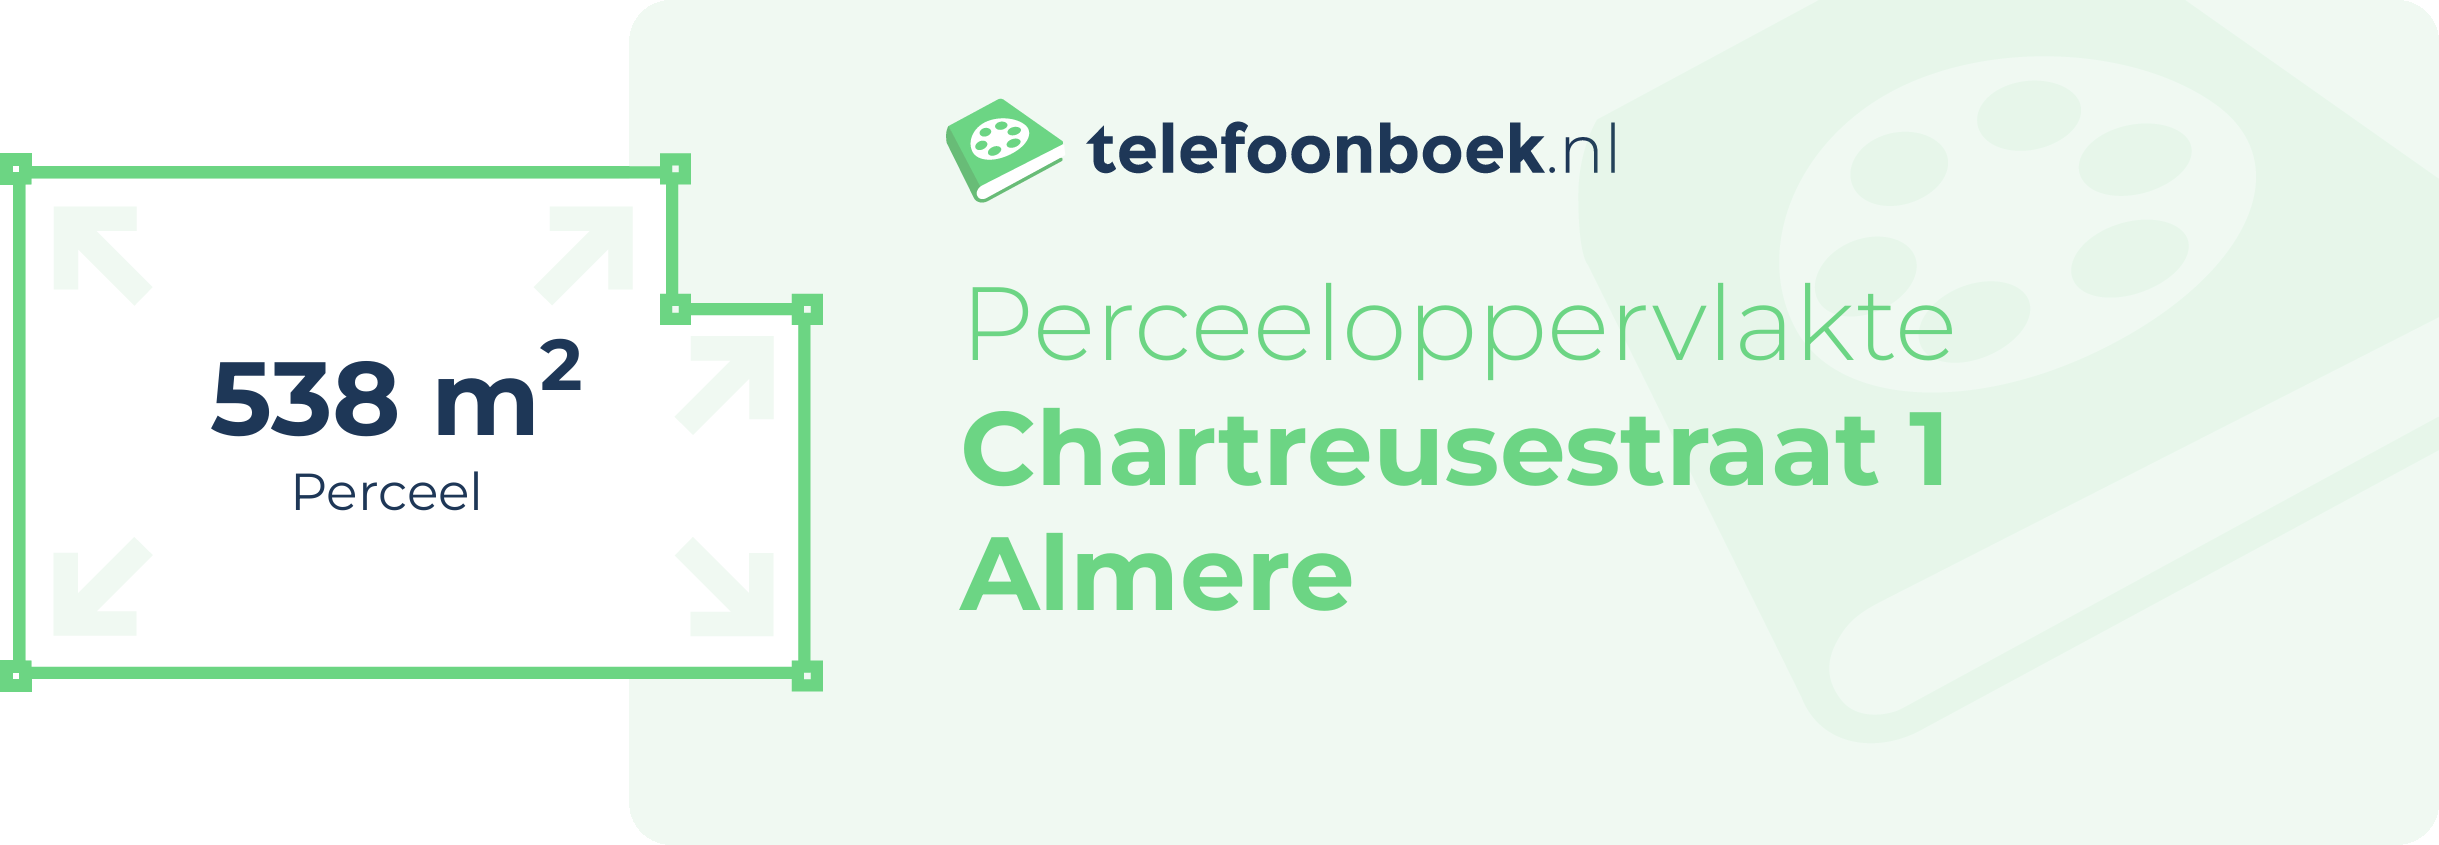 Perceeloppervlakte Chartreusestraat 1 Almere